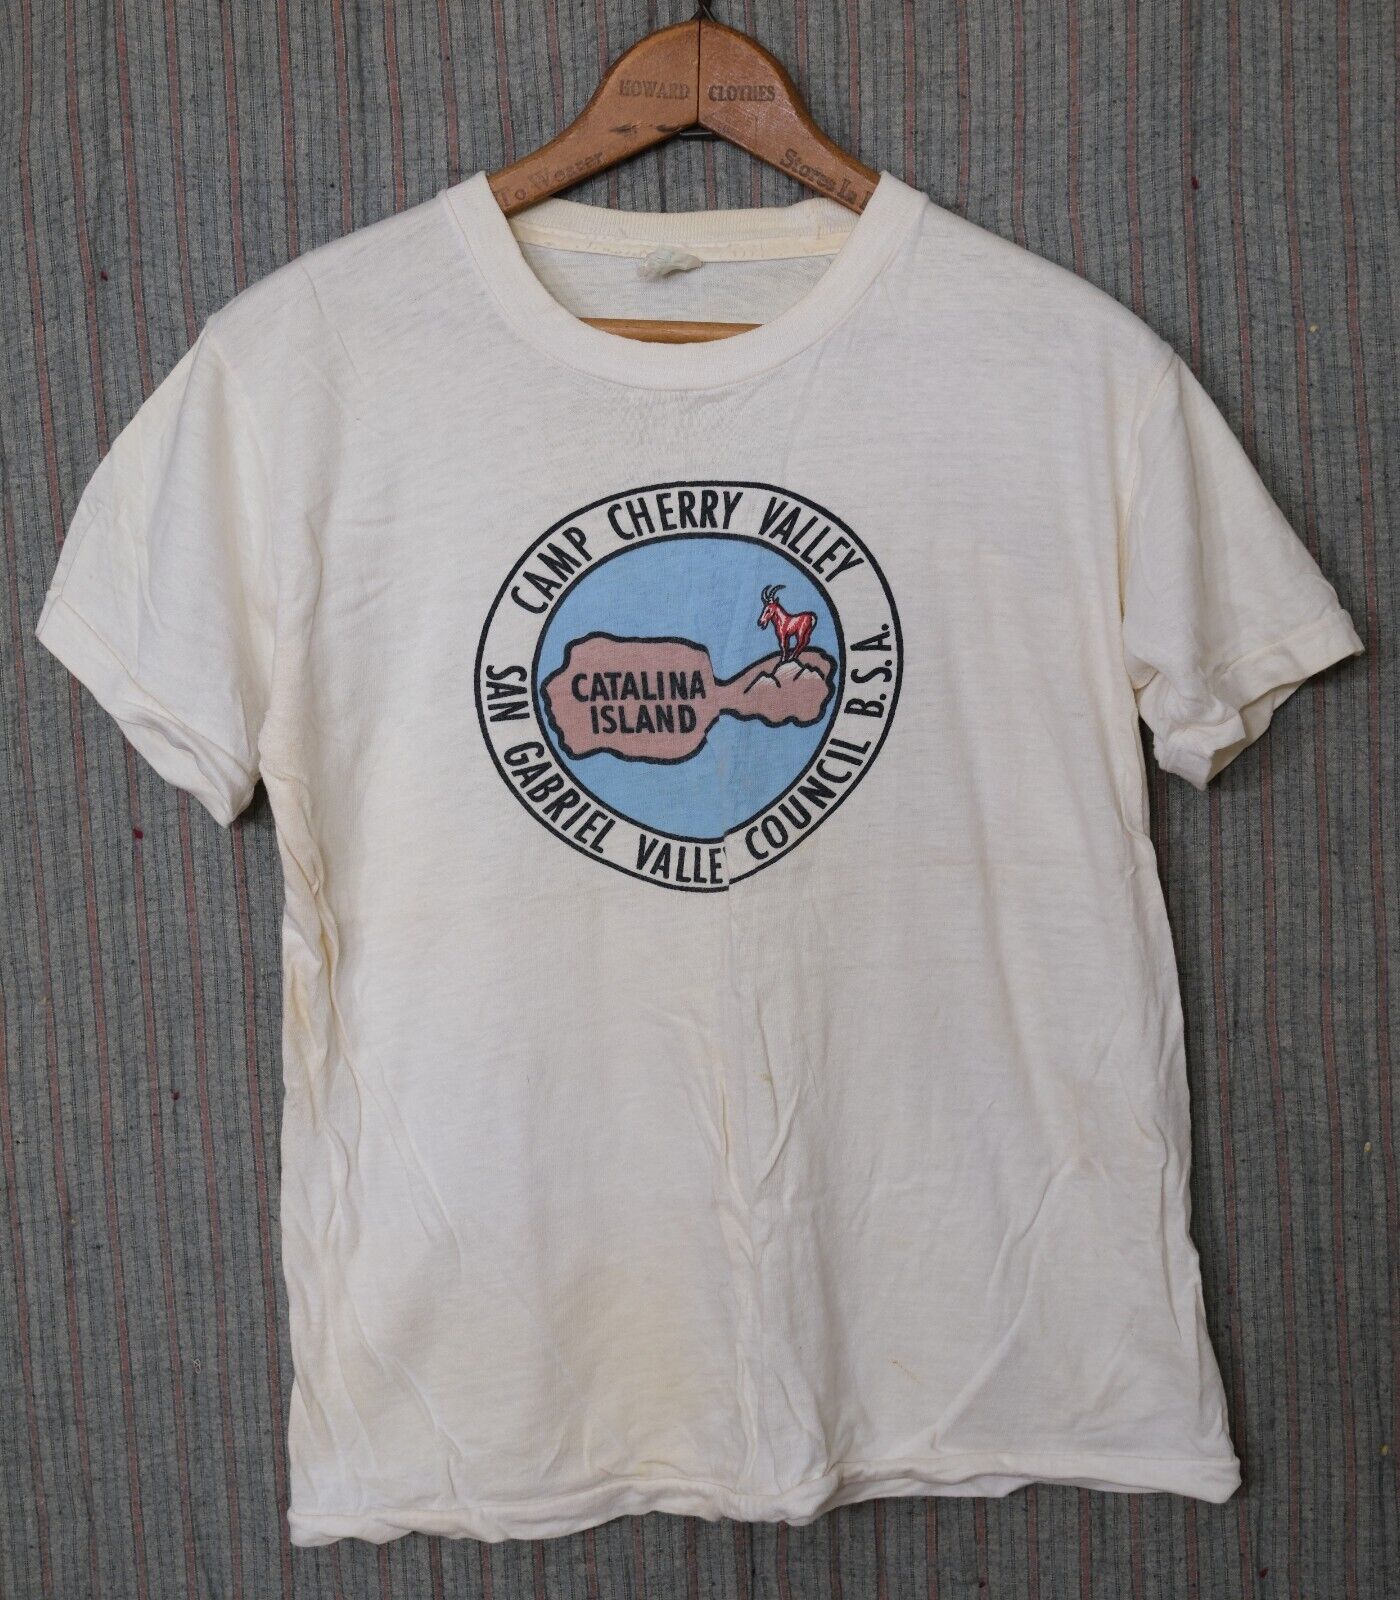 Vtg RARE 1960's BSA Camp Cherry Valley San Gabriel Catalina Island T-shirt Sz M